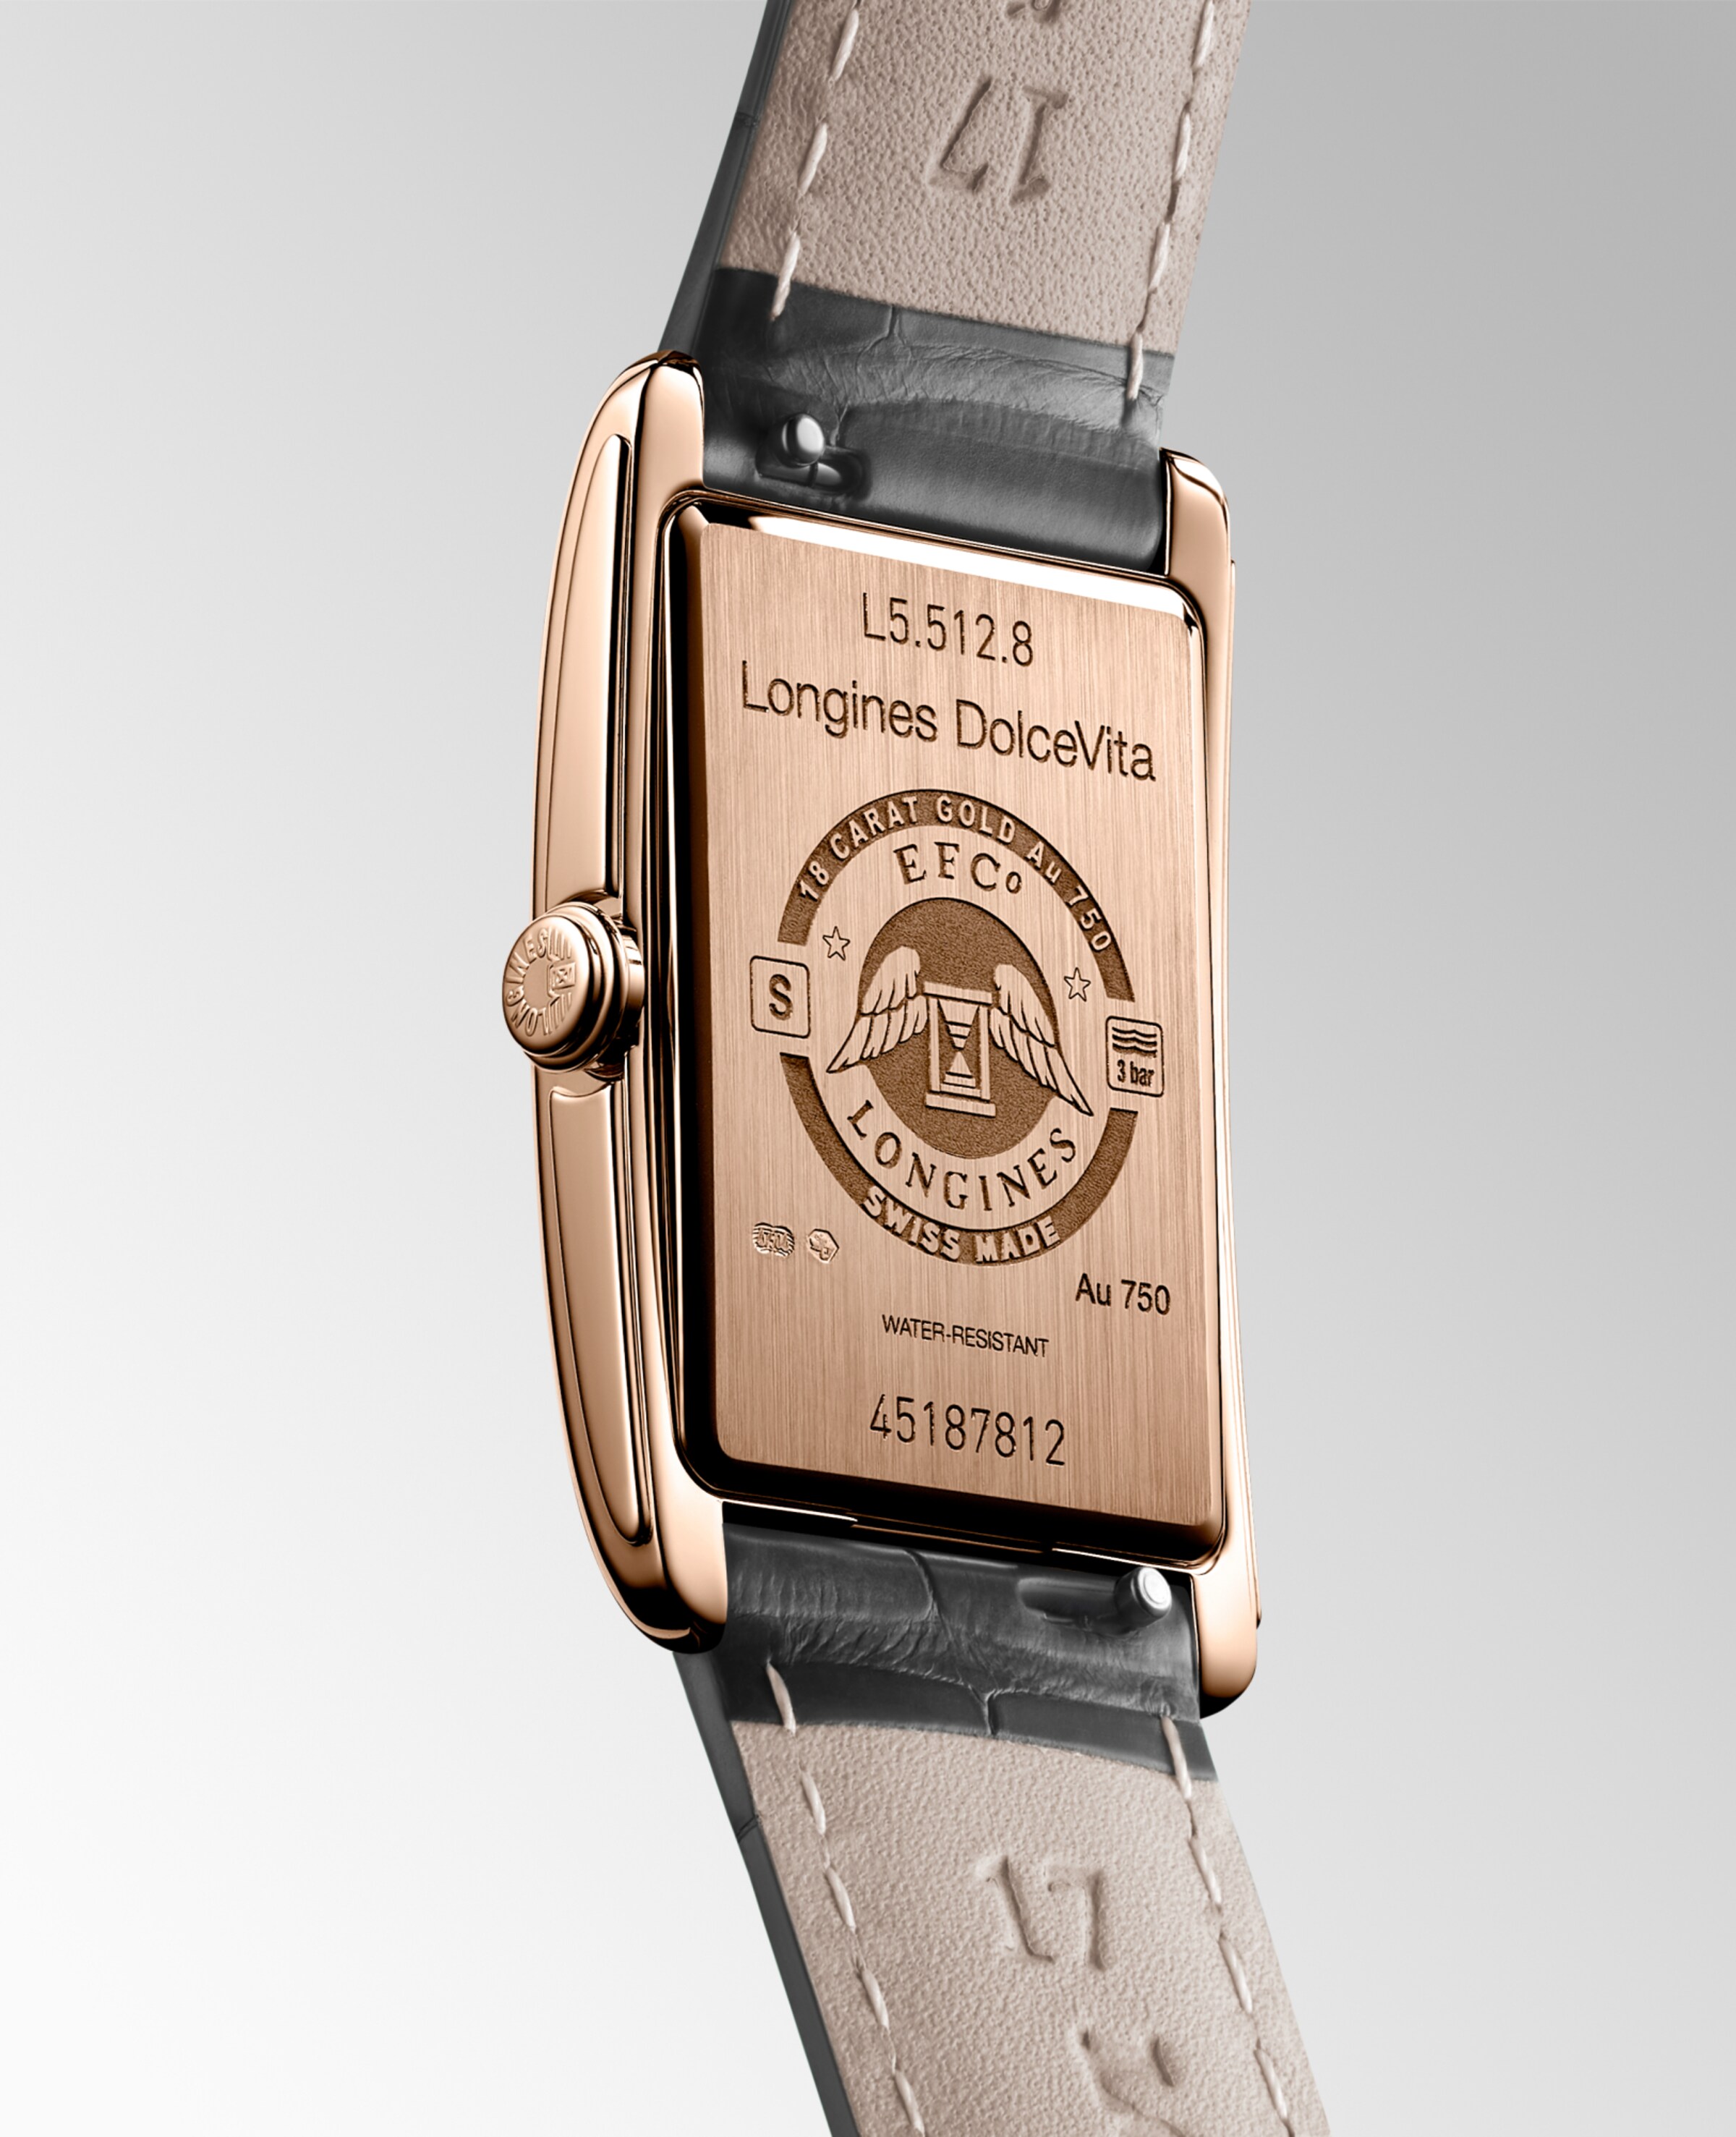 Longines DOLCEVITA Quartz 18 karat pink gold Watch - L5.512.8.75.2